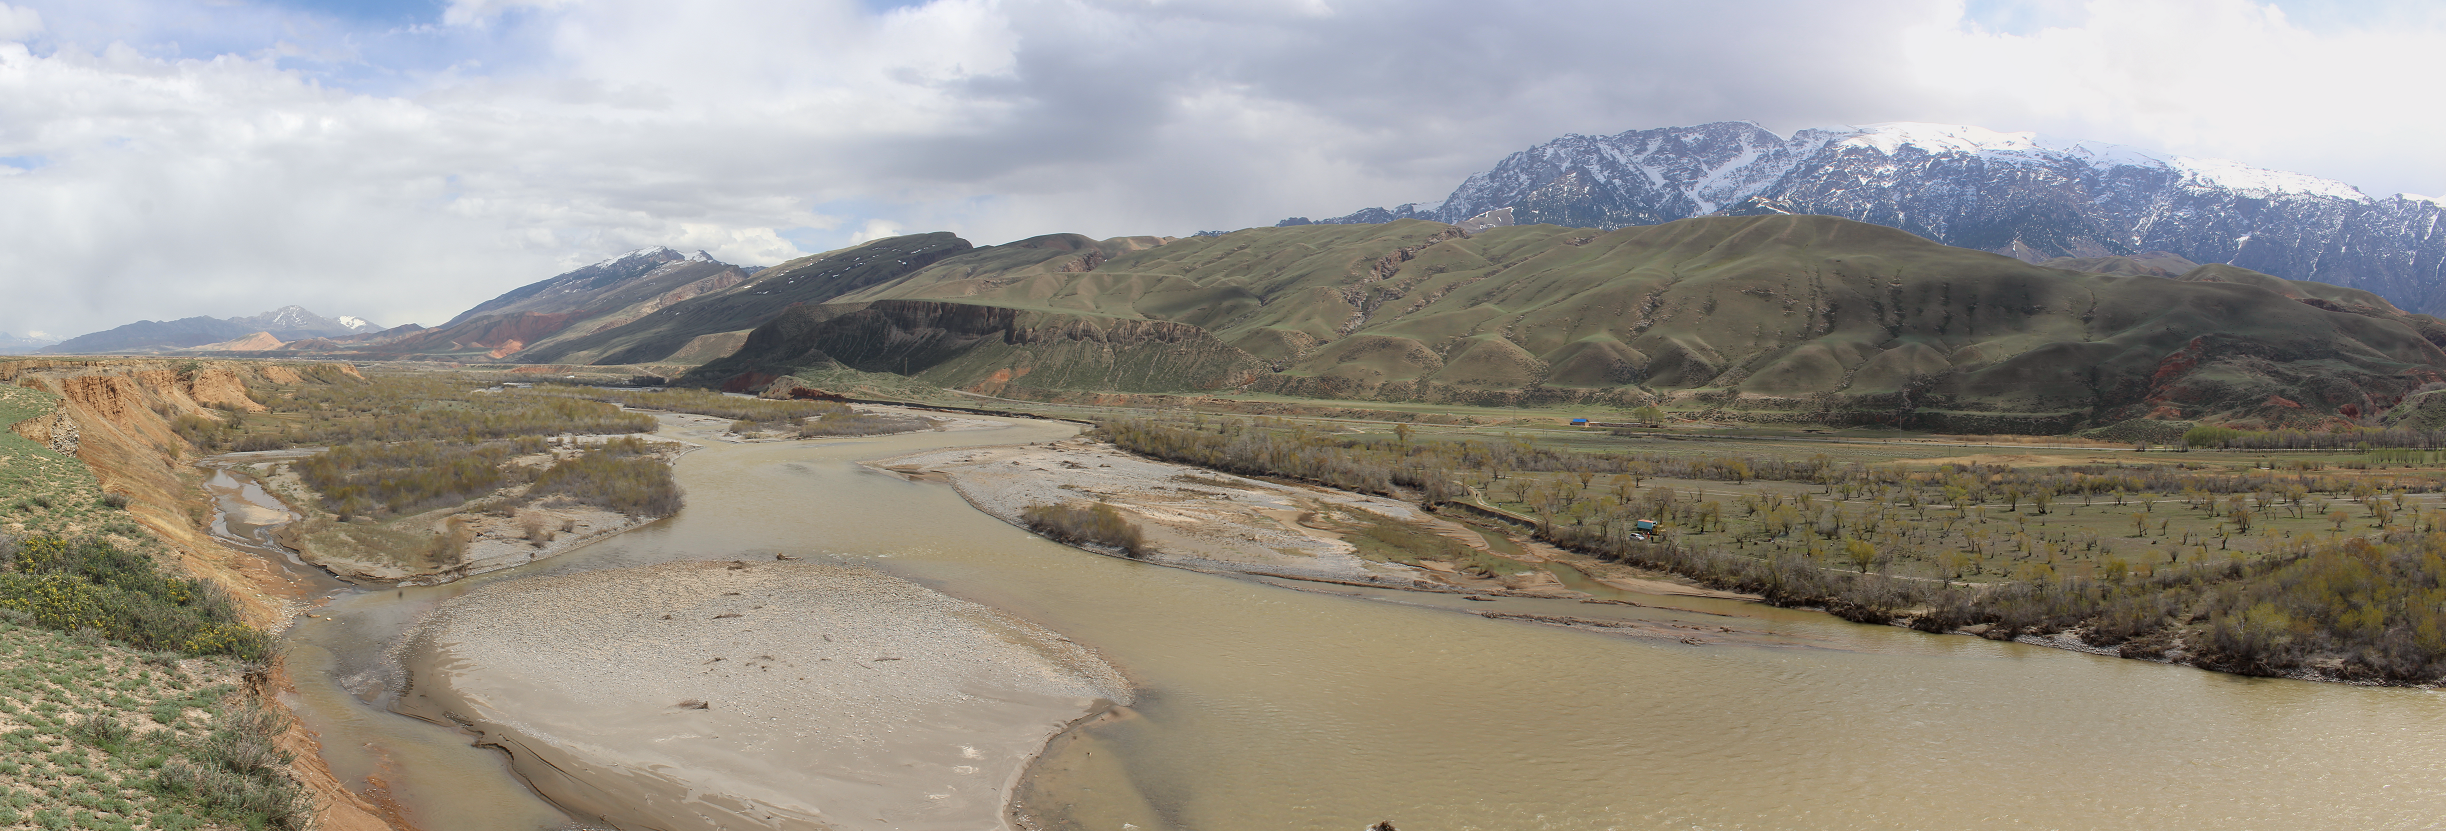 ©Florian Betz, Catholic University of Eichstaett-Ingolstadt: Wild river landscape on the Naryn, Kyrgyzstan.